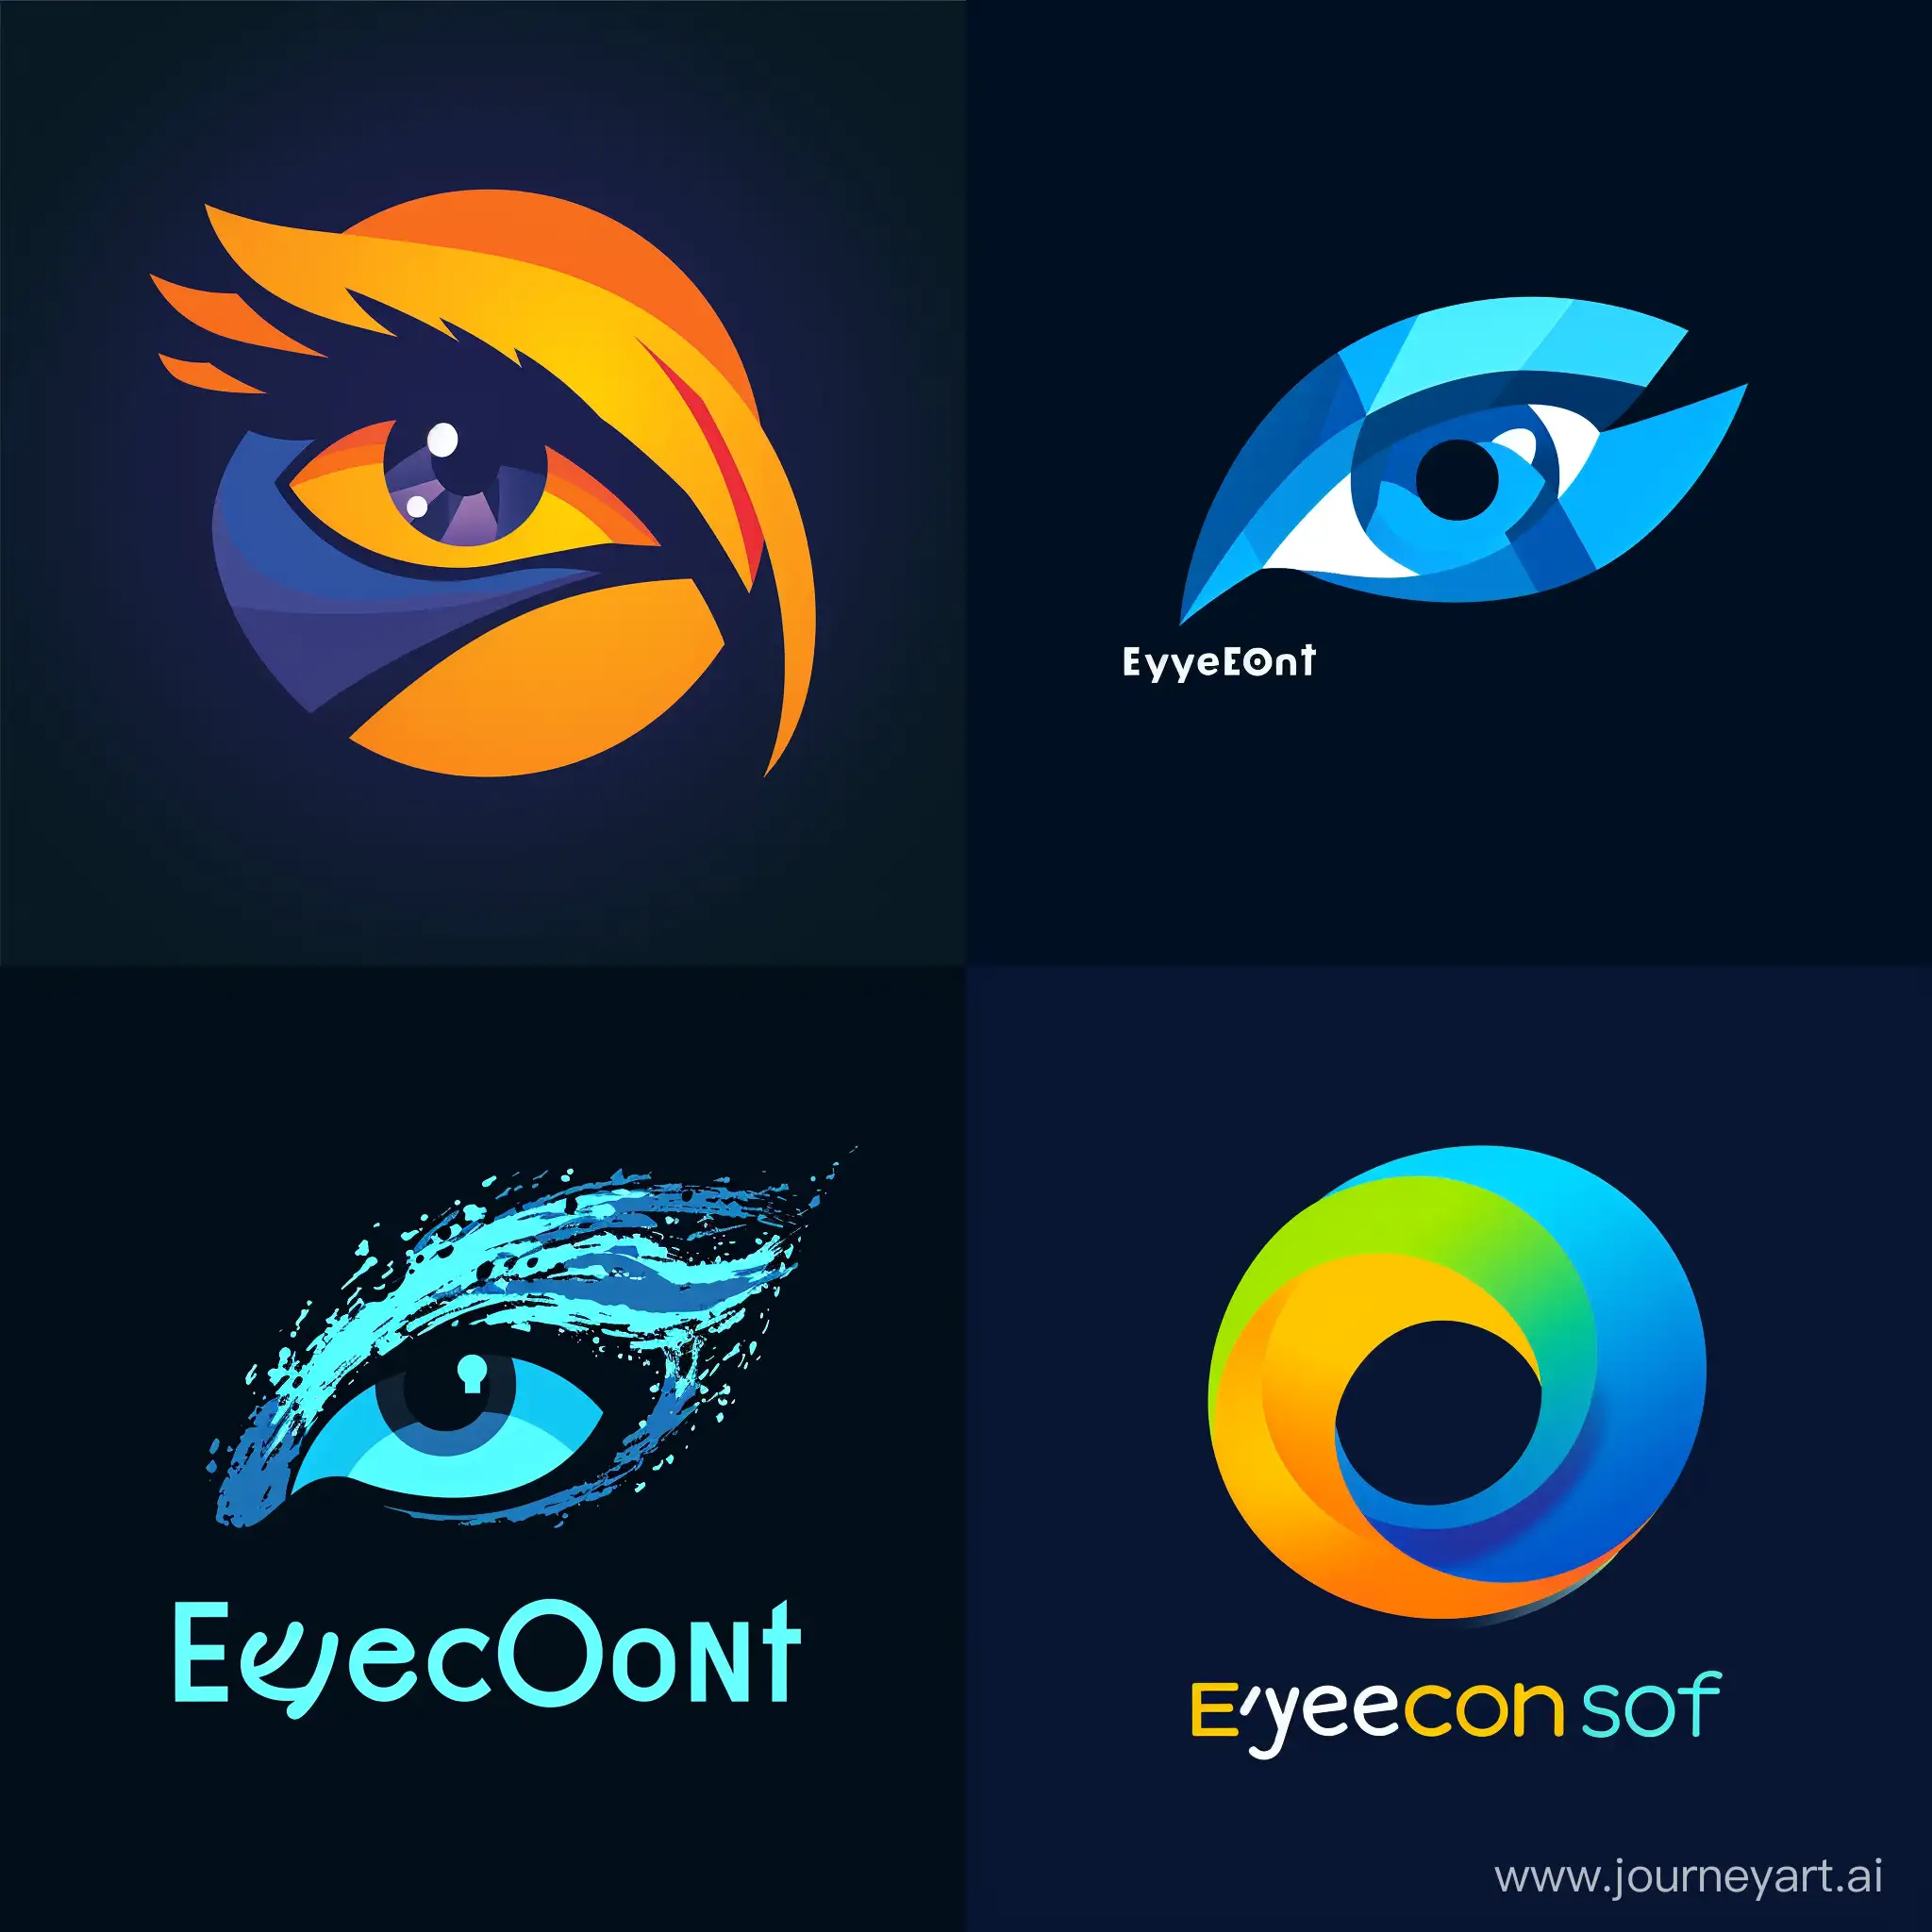 Eyeconsoft-Logo-Design-Version-6-with-Square-Aspect-Ratio